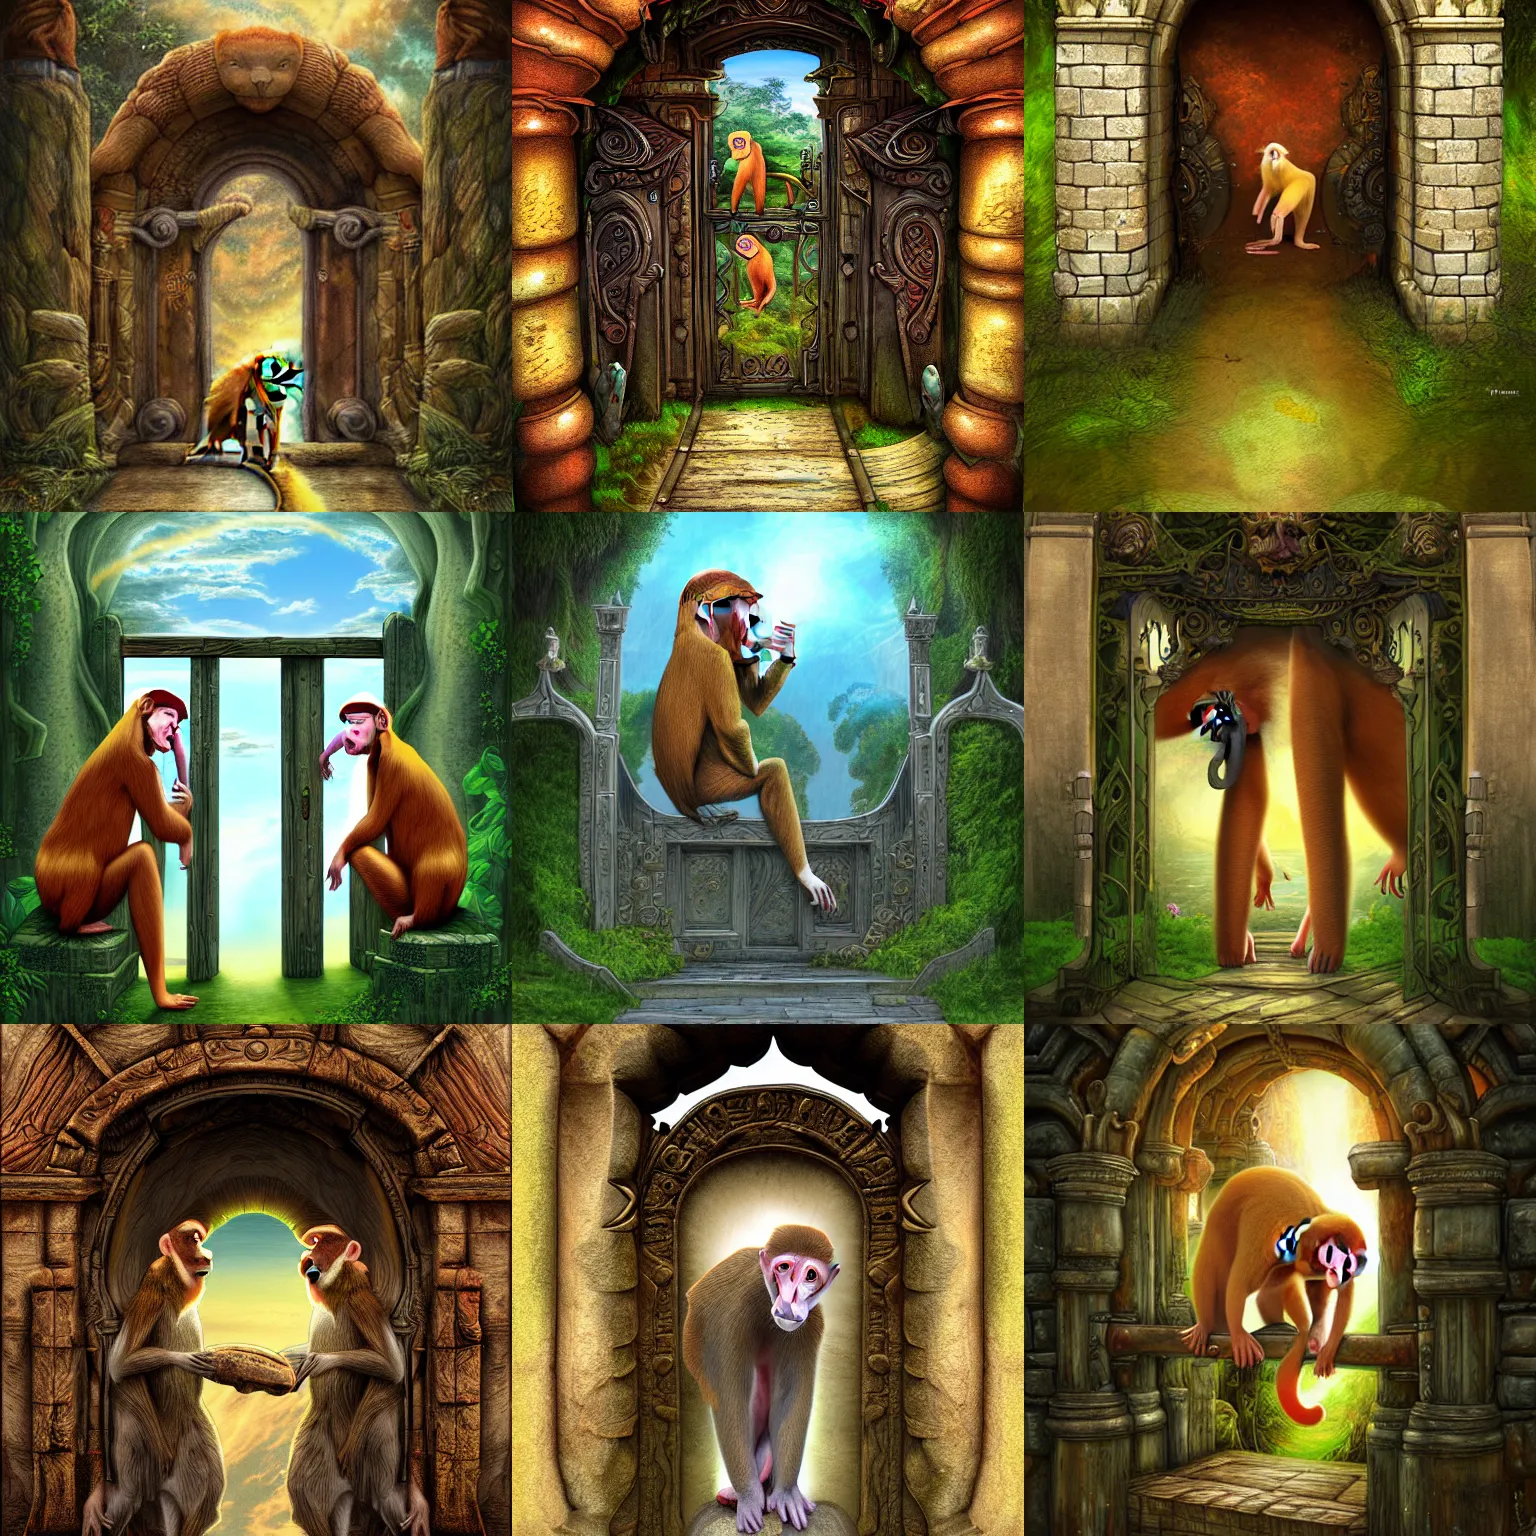 Prompt: The gate to the eternal kingdom of Proboscis Monkeys, fantasy, digital art, HD, detailed.